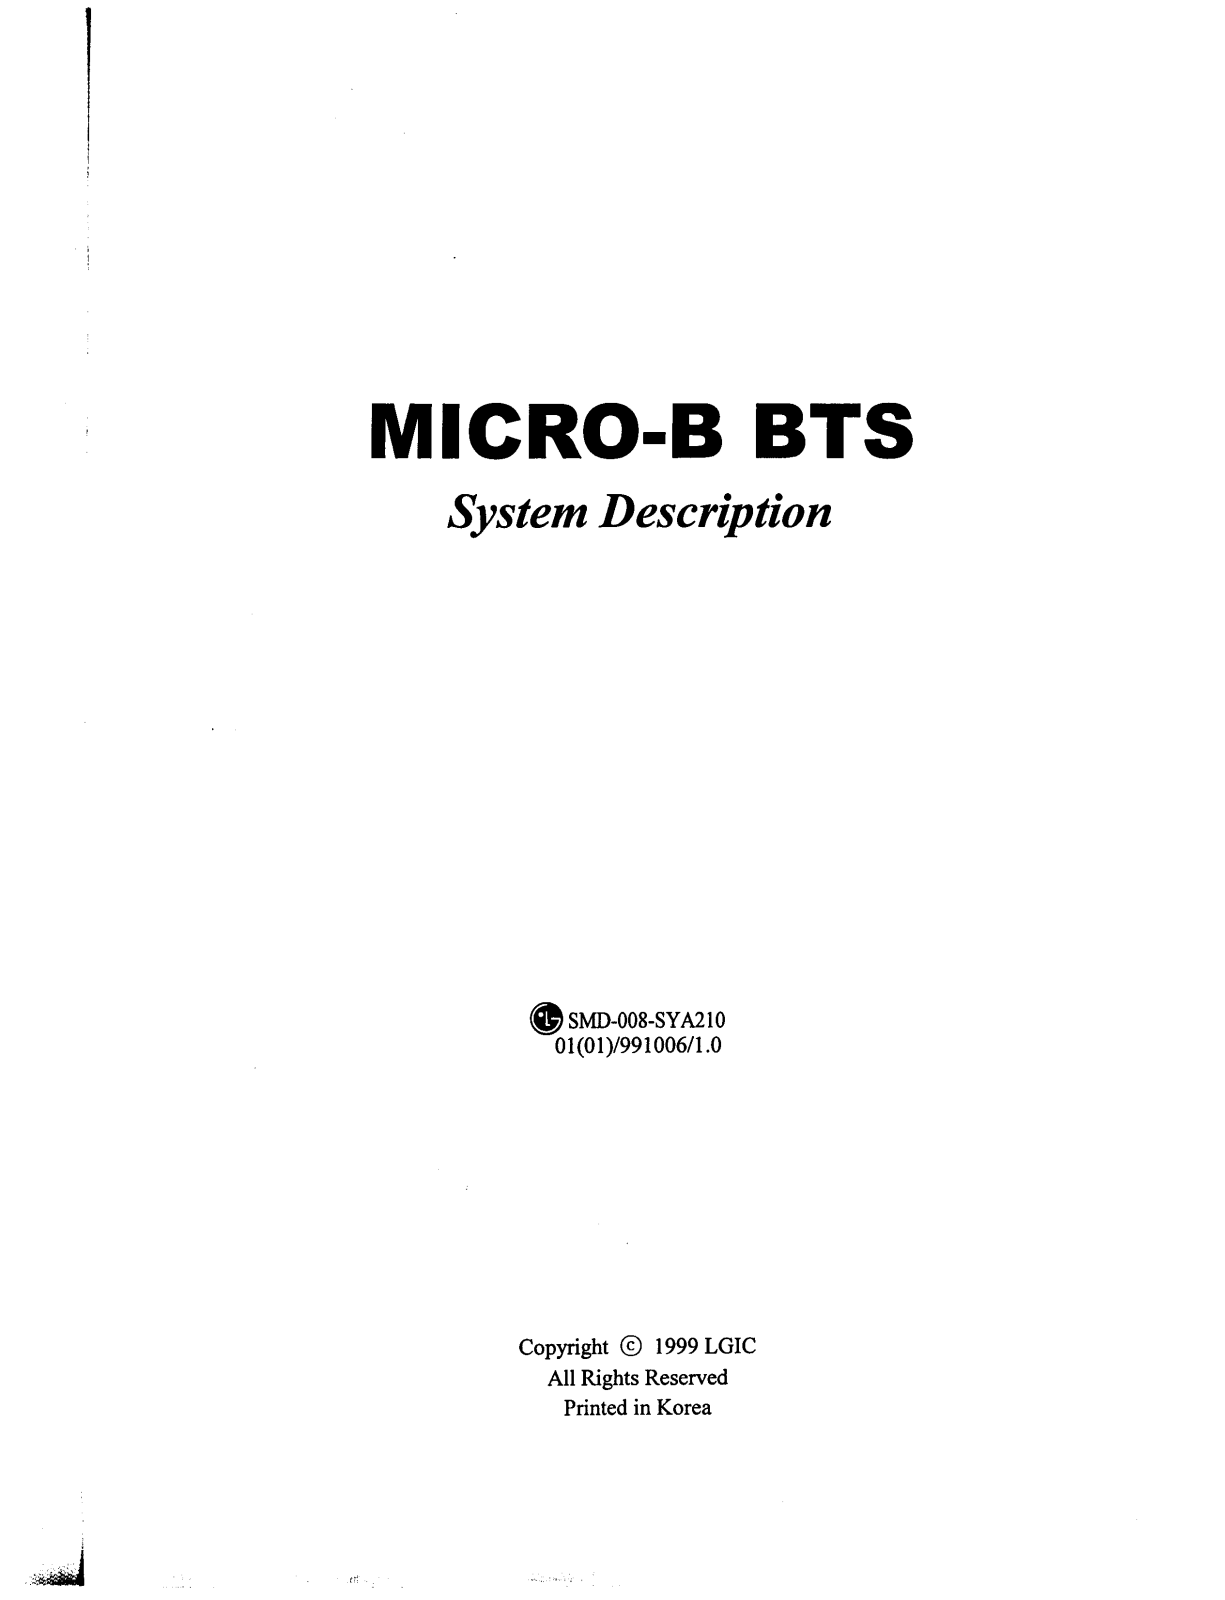 LG MICRO-B BTS Users manual